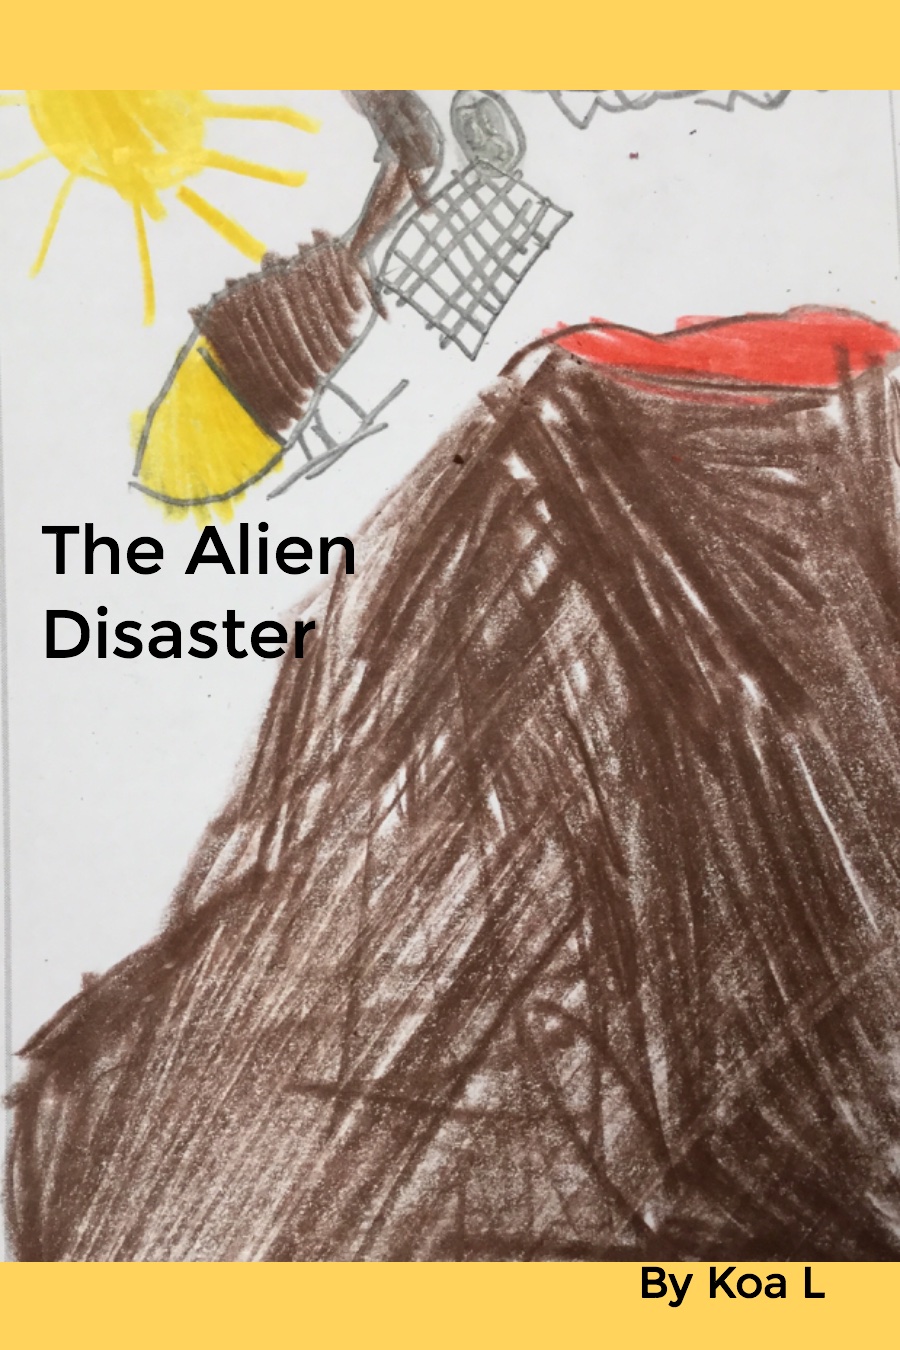 The Alien Disaster by Koa L